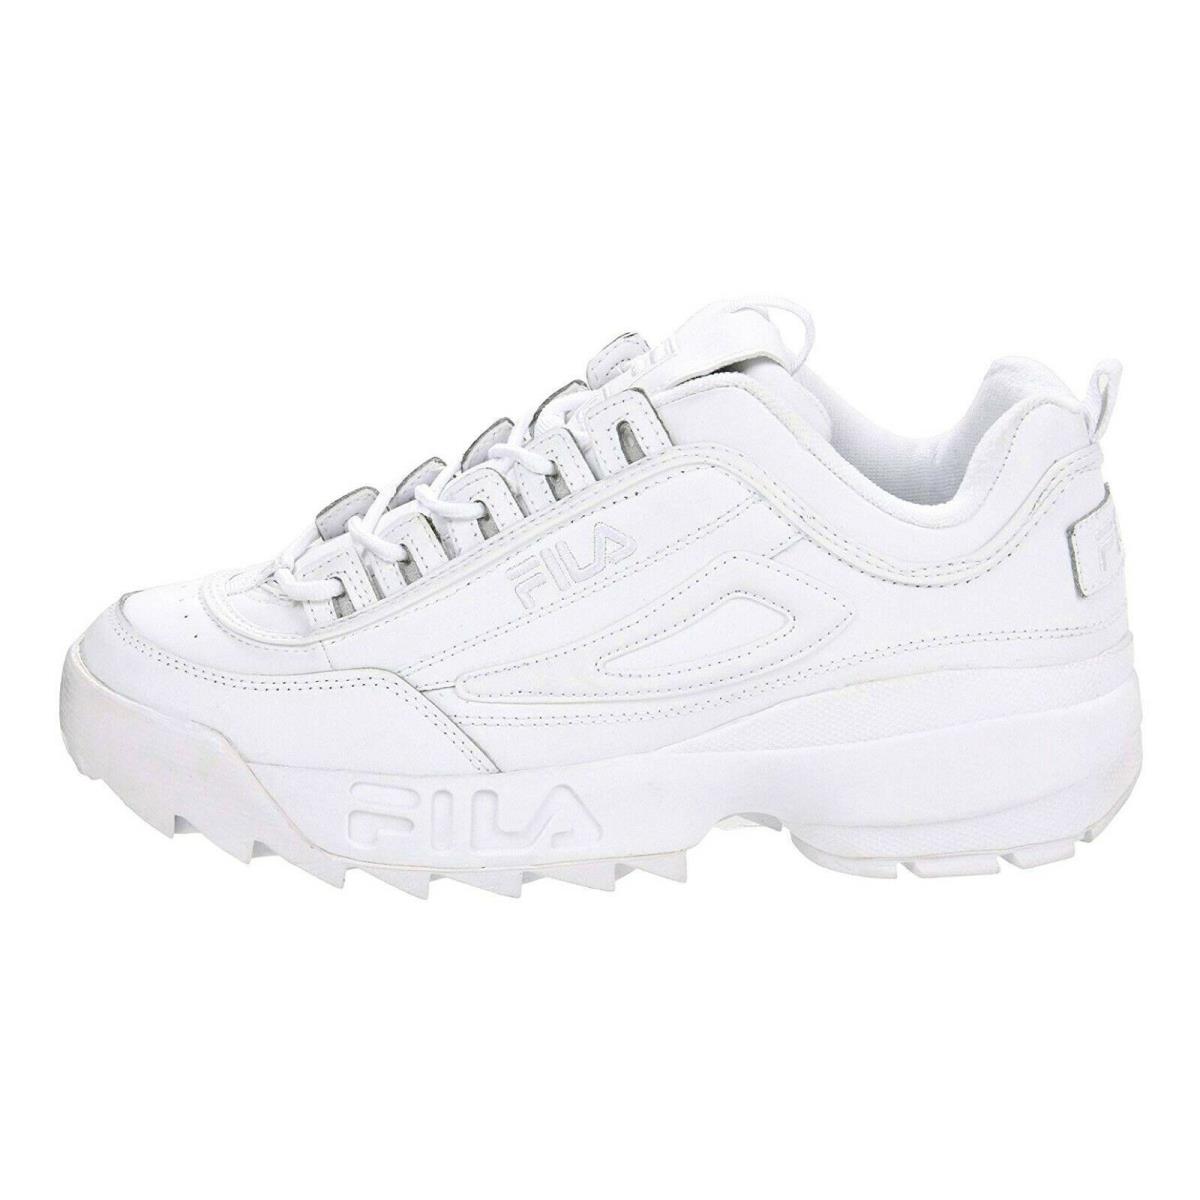 Men Fila Disruptor II Synthetic Leather Fw01655-148 White White Sneaker Shoe